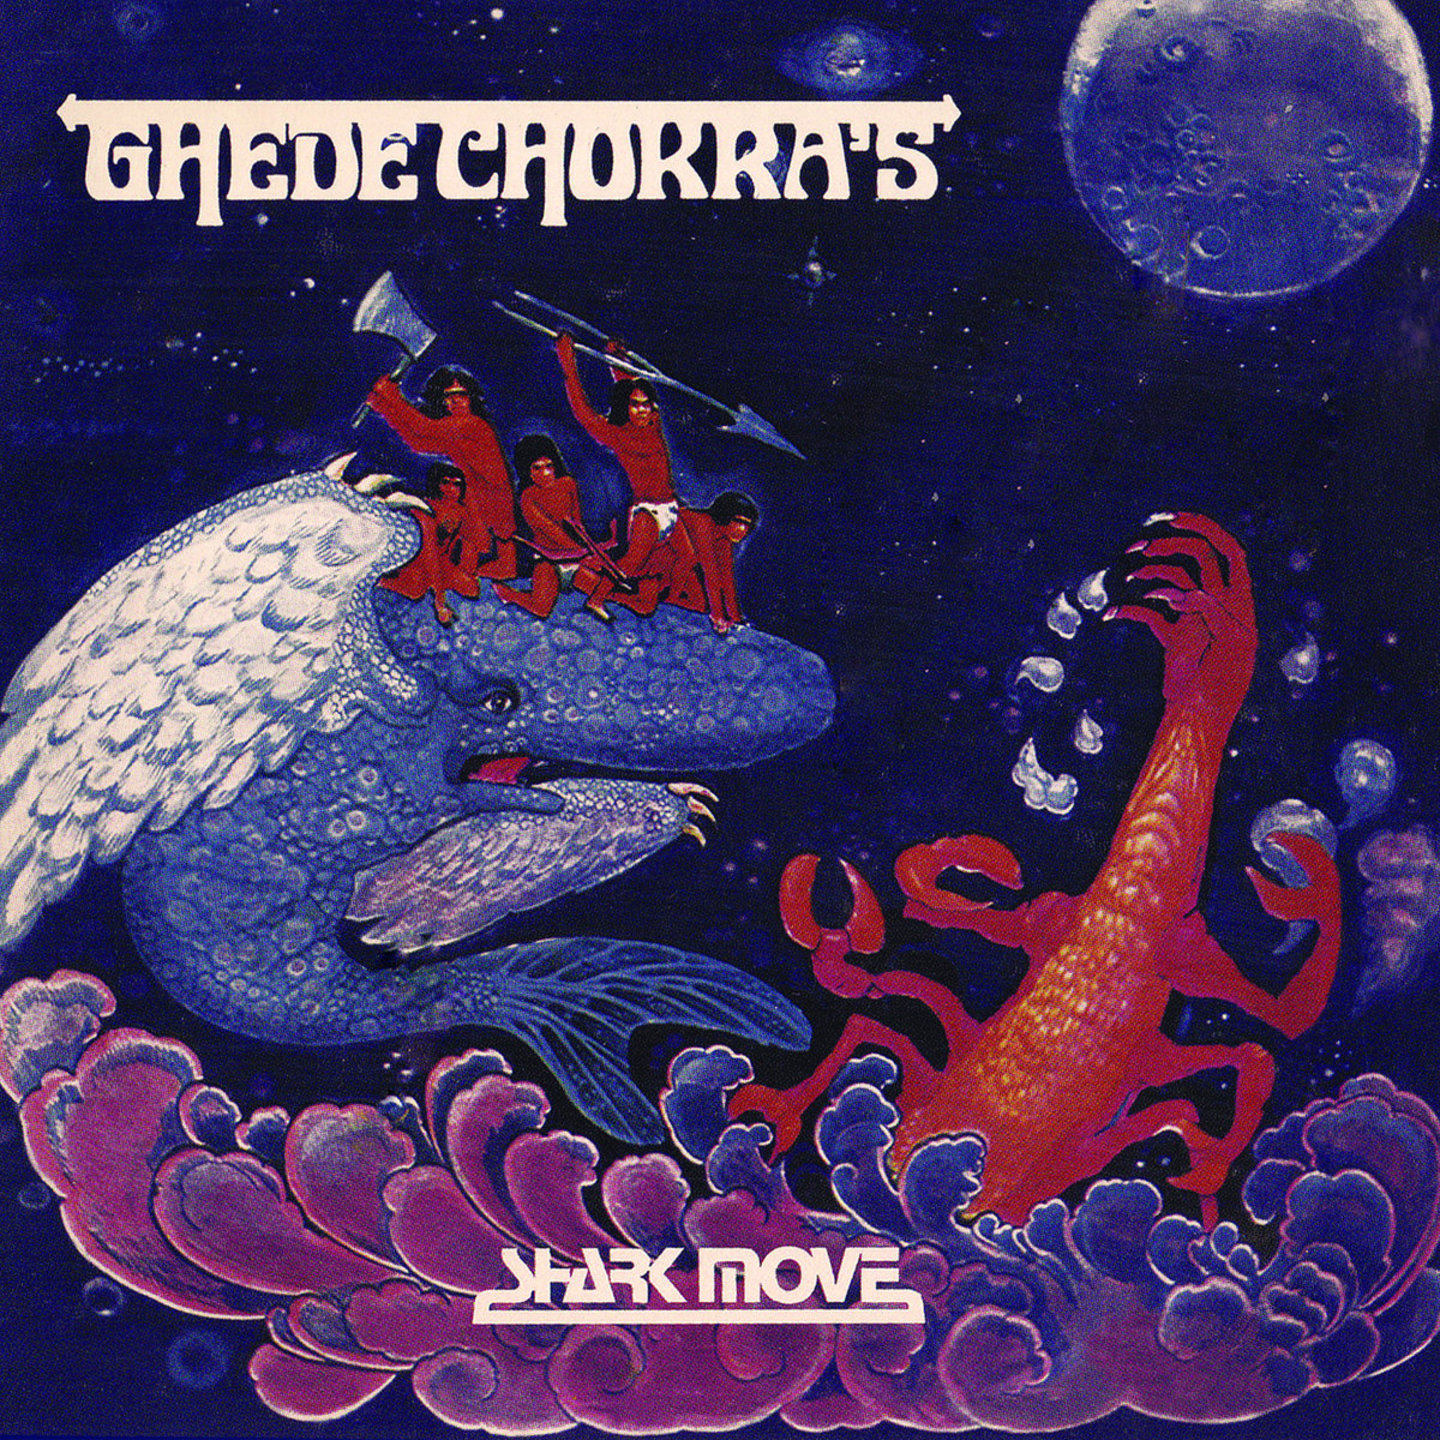 SHARK MOVE - Ghede Chokras LP Blue with White Splatter vinyl